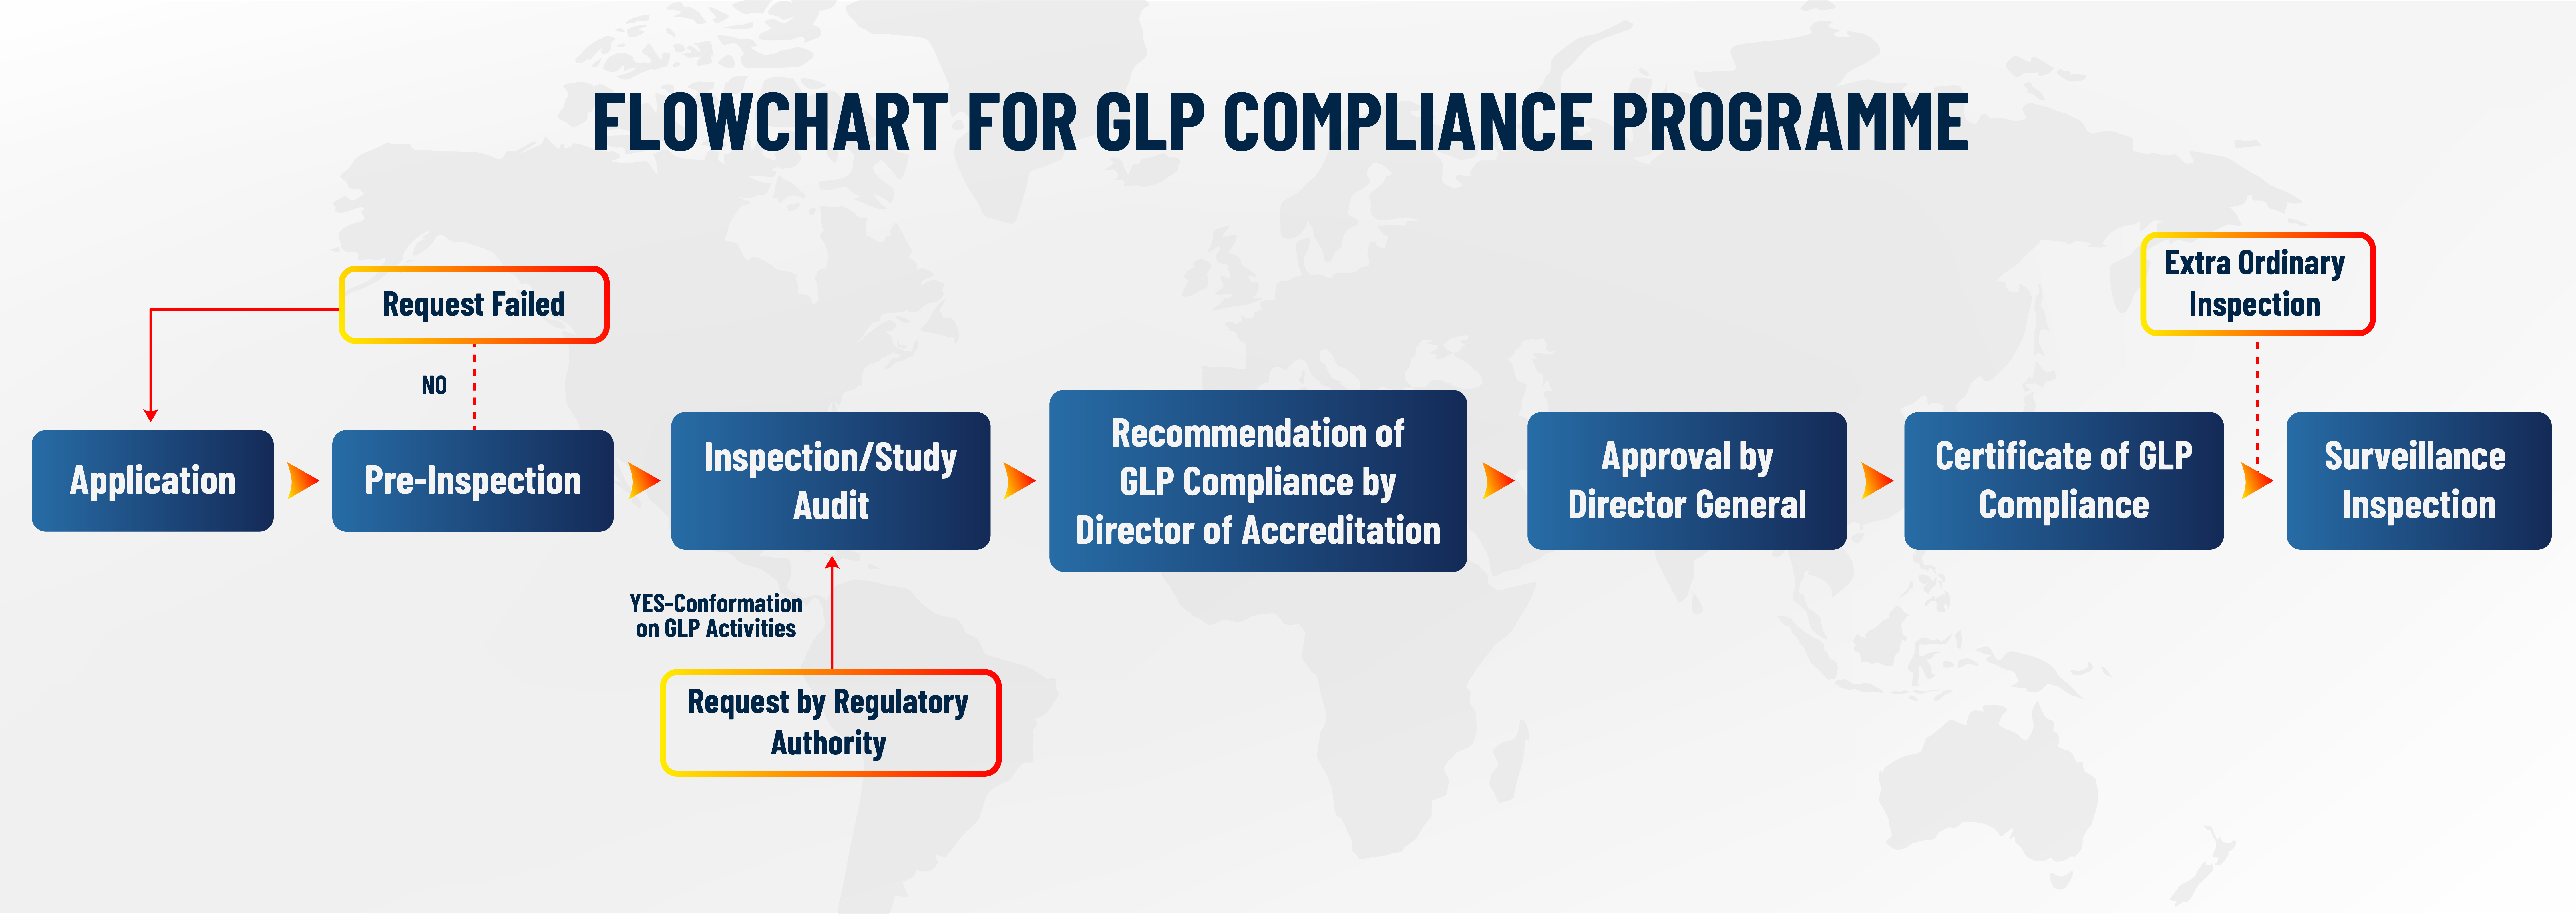 Flowchart for GLP Compliance Programme